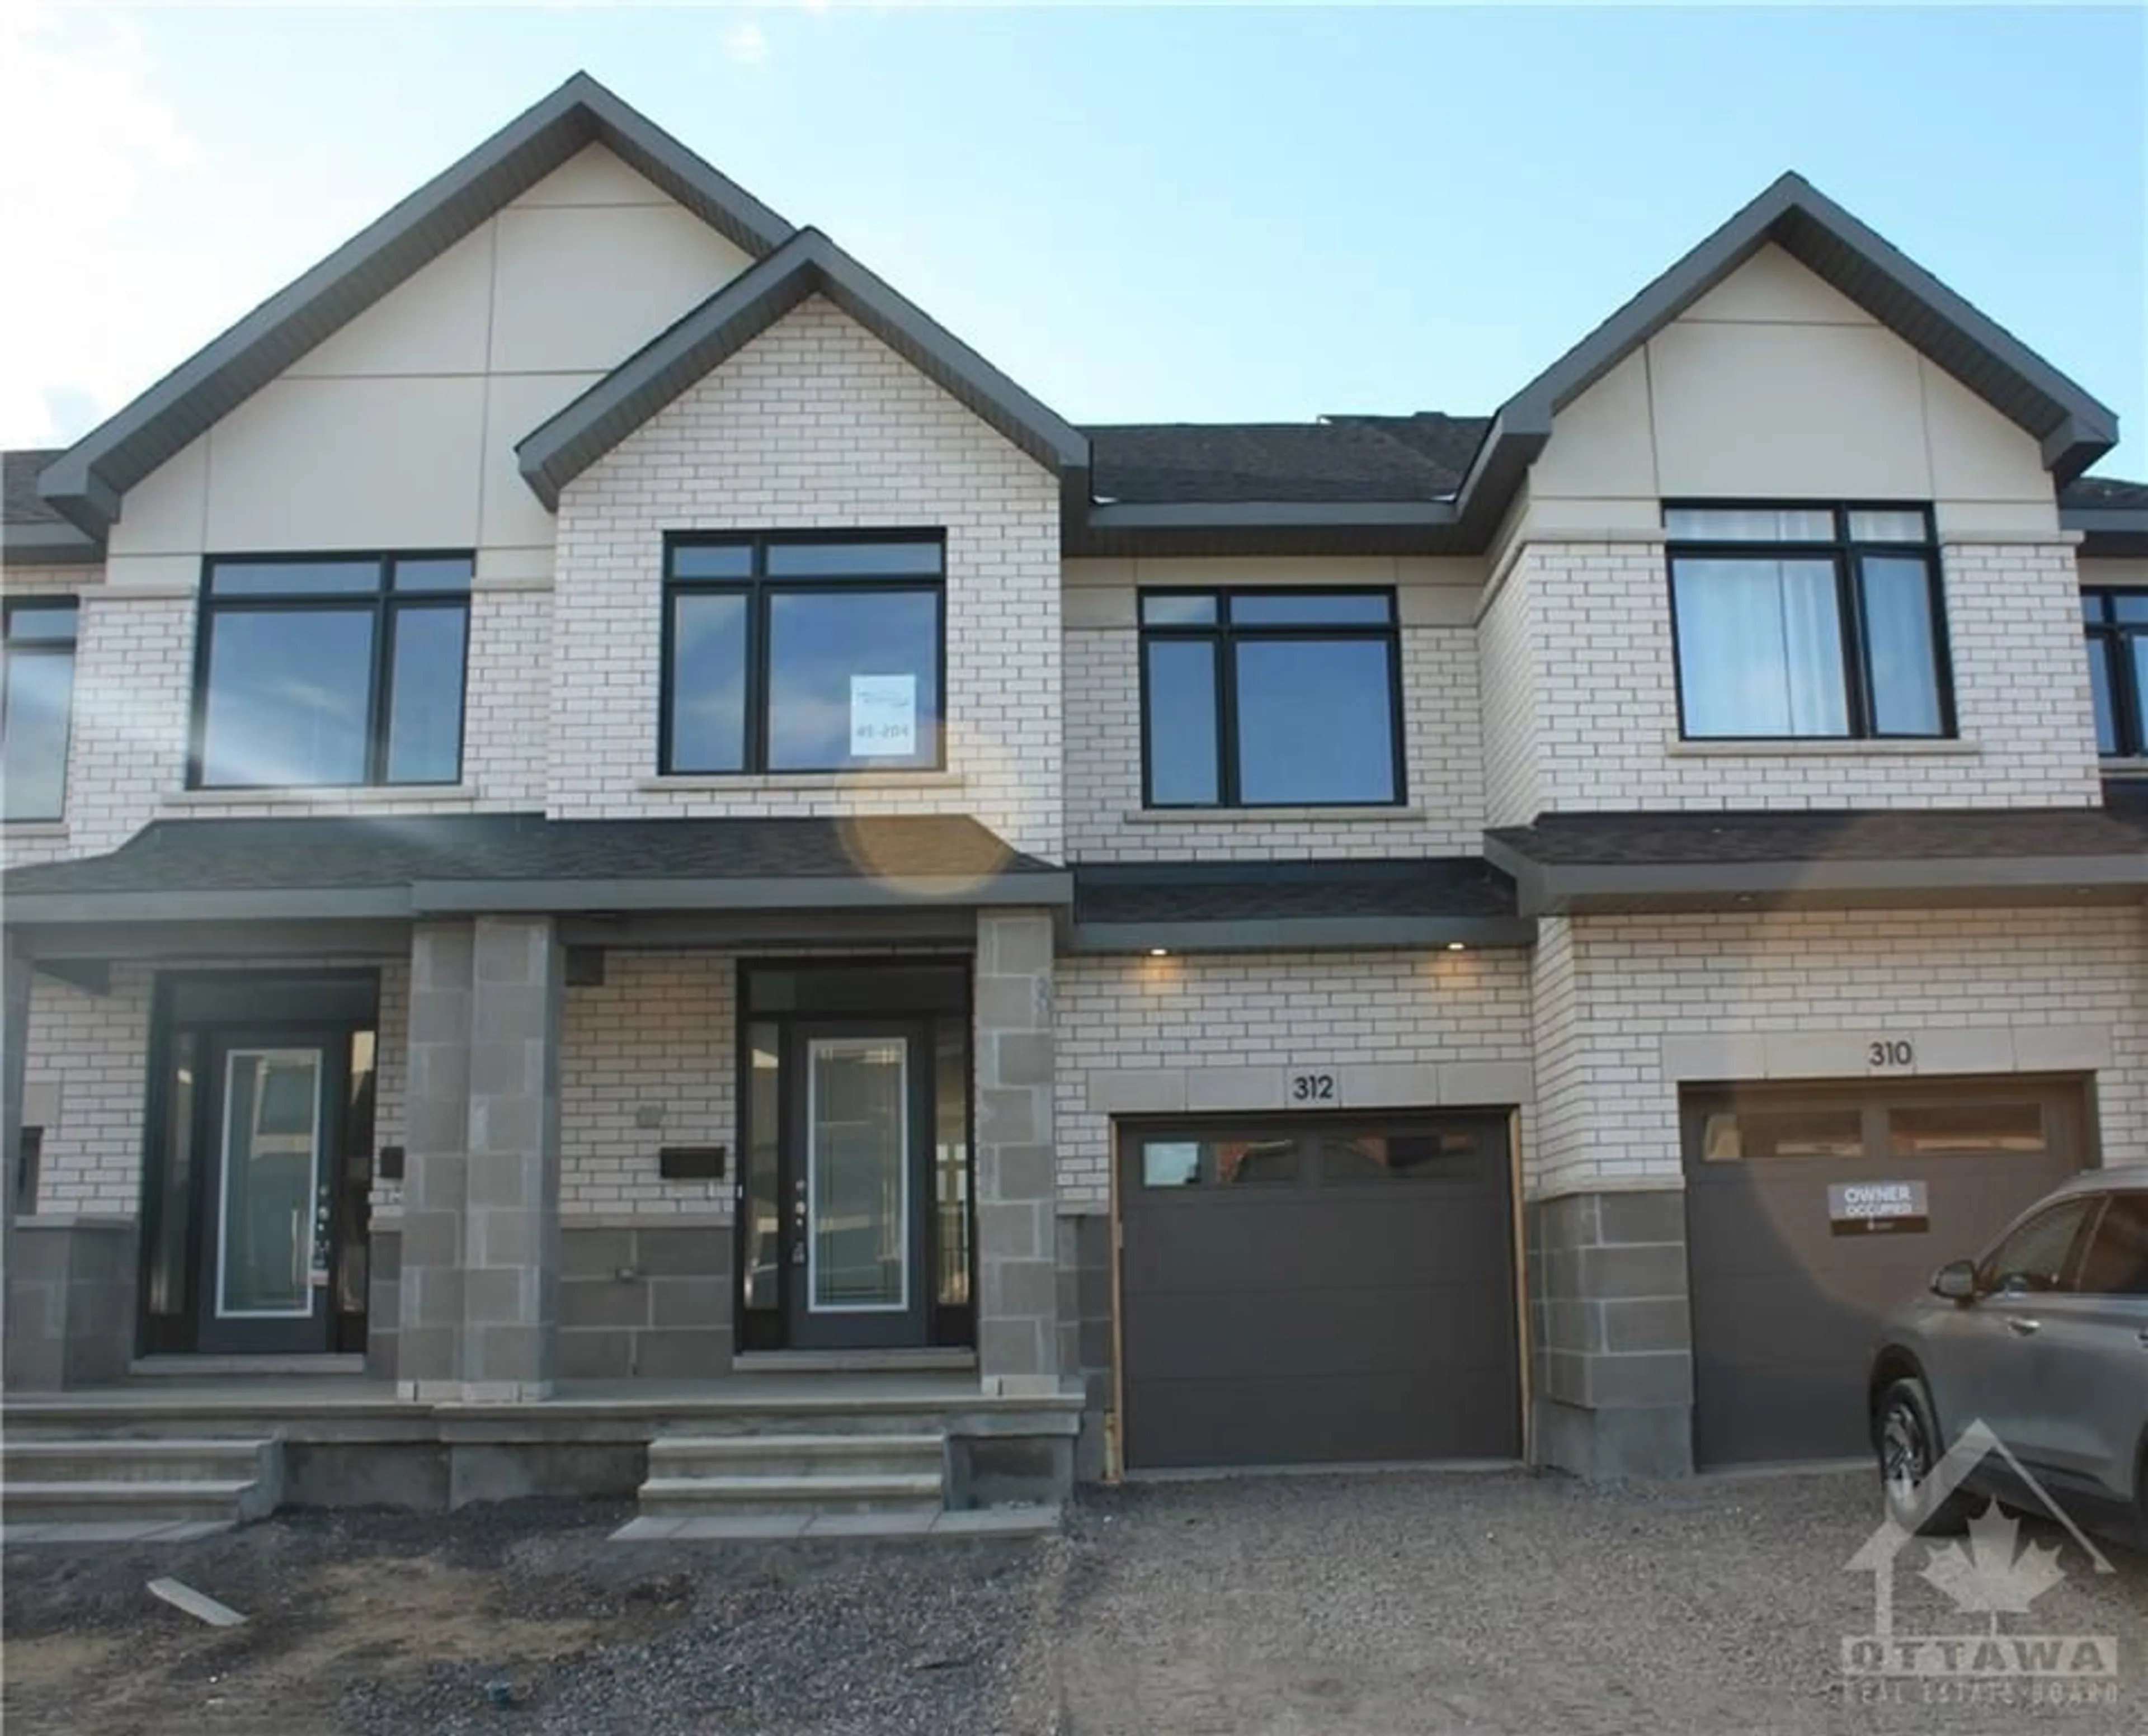 Home with brick exterior material for 312 MAKOBE Lane, Ottawa Ontario K4M 0M1